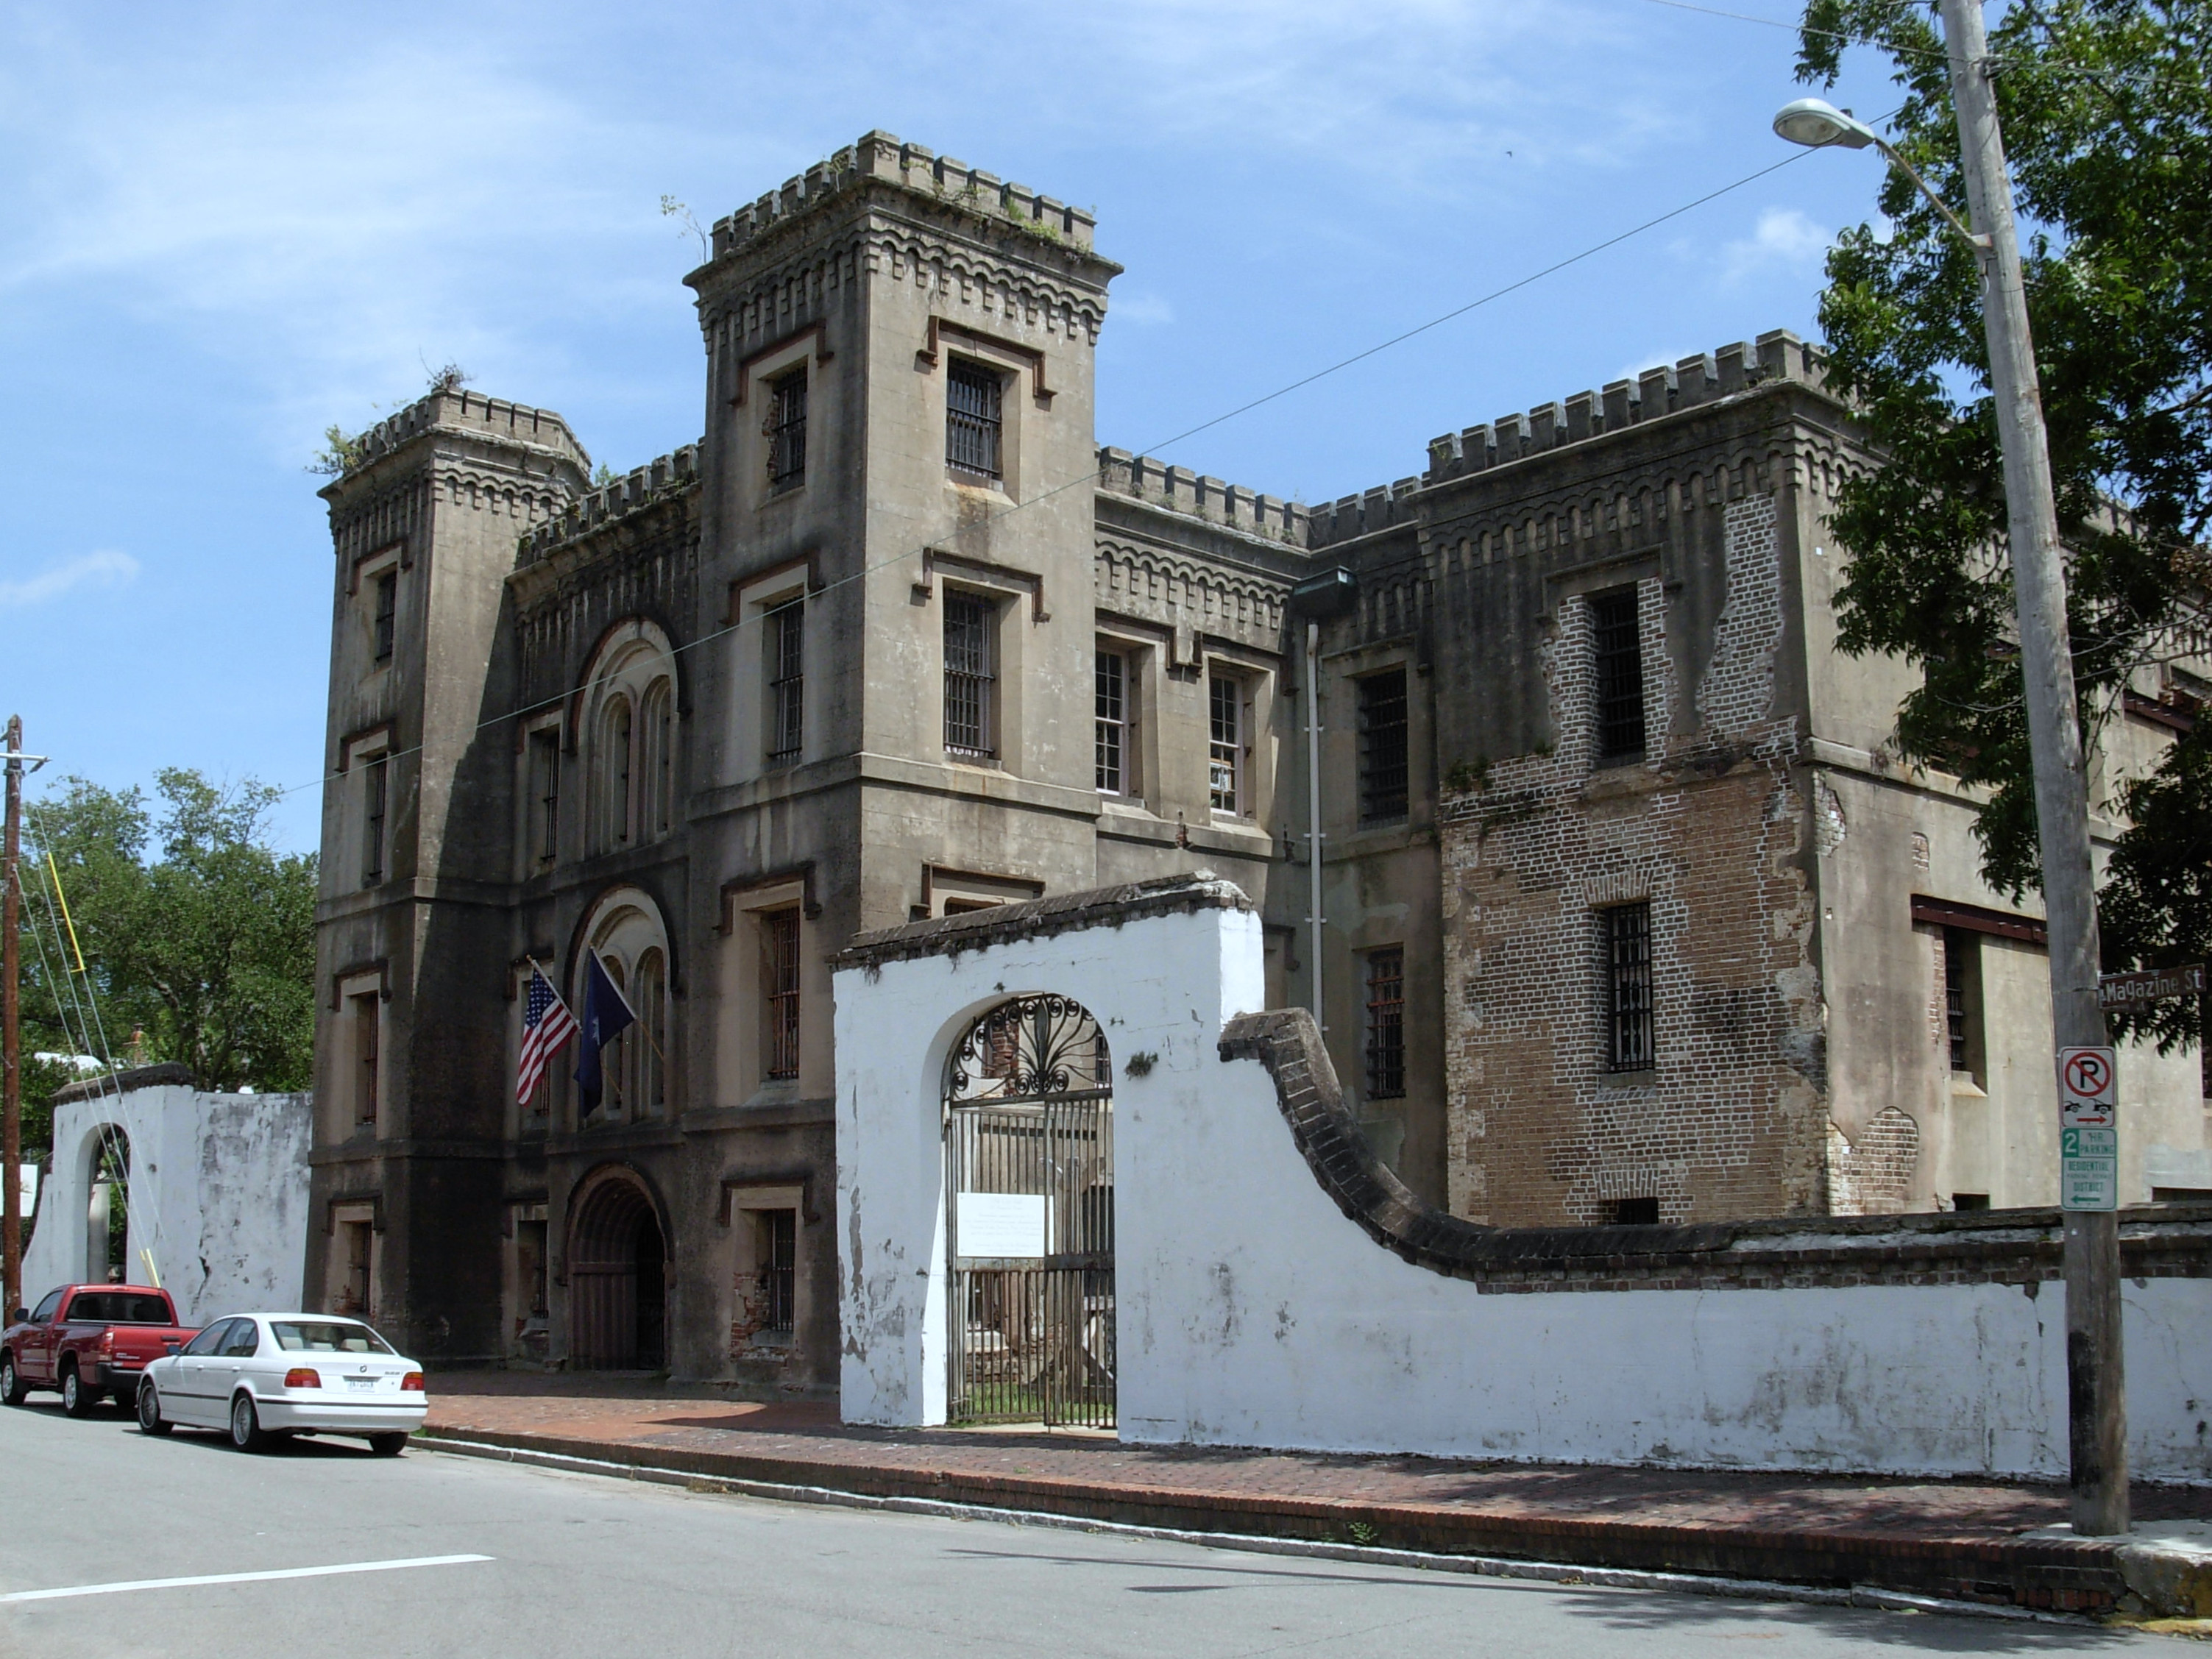 ghosts Old City Jail Charleston South Carolina haunted